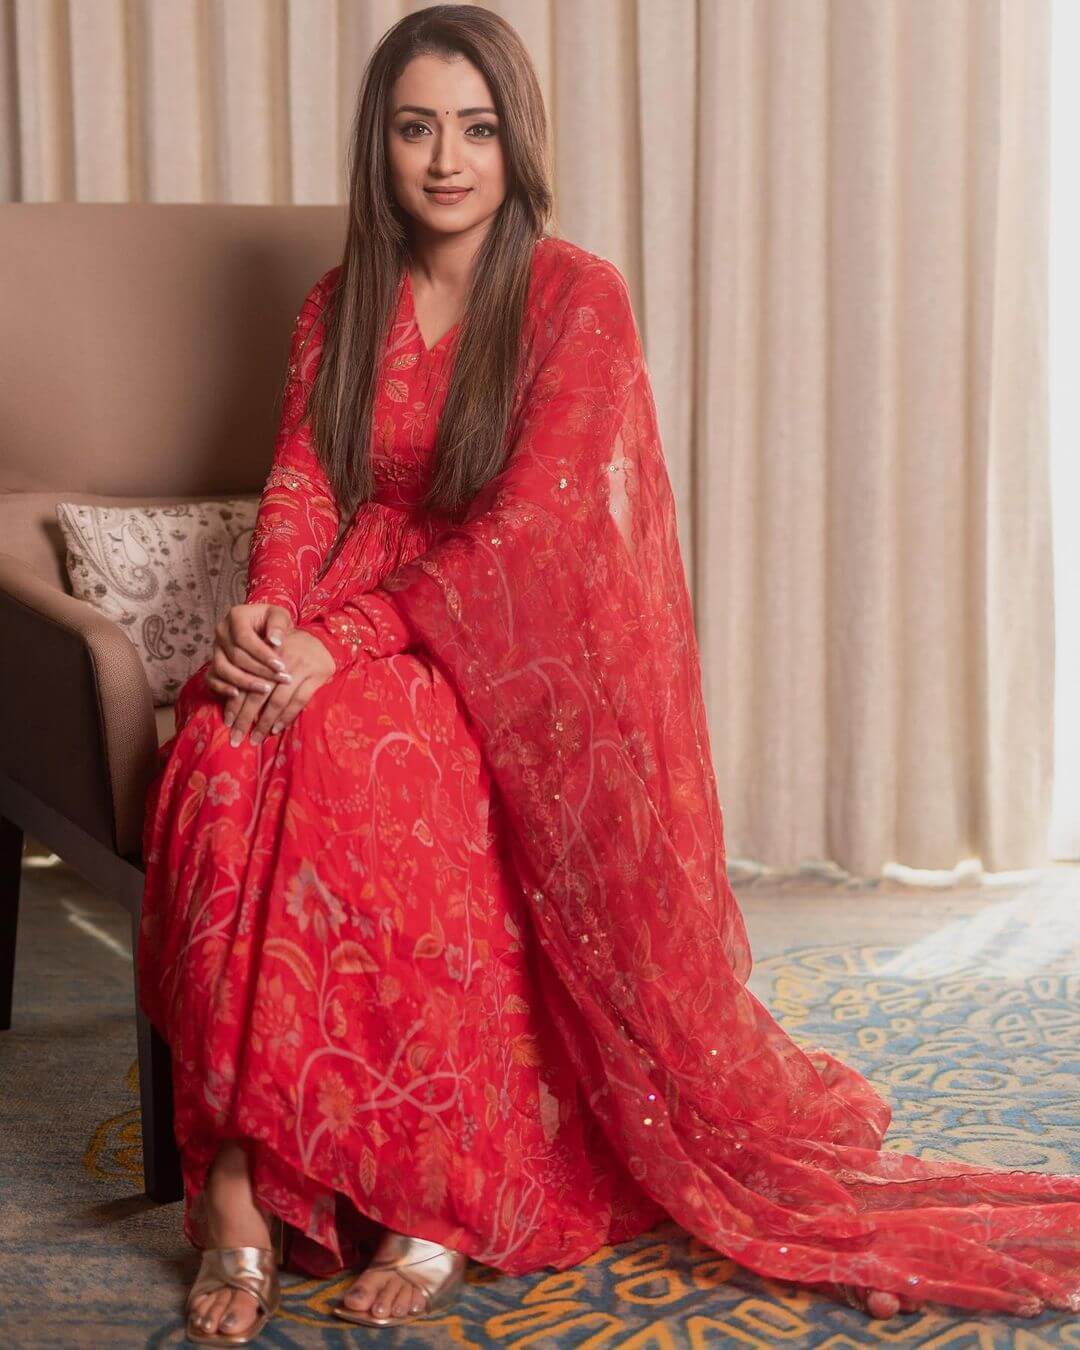 Trisha Krishnan Red Empire Style Full Sleeves Georgette Kurta Set Elegant & Classy Outfits Looks